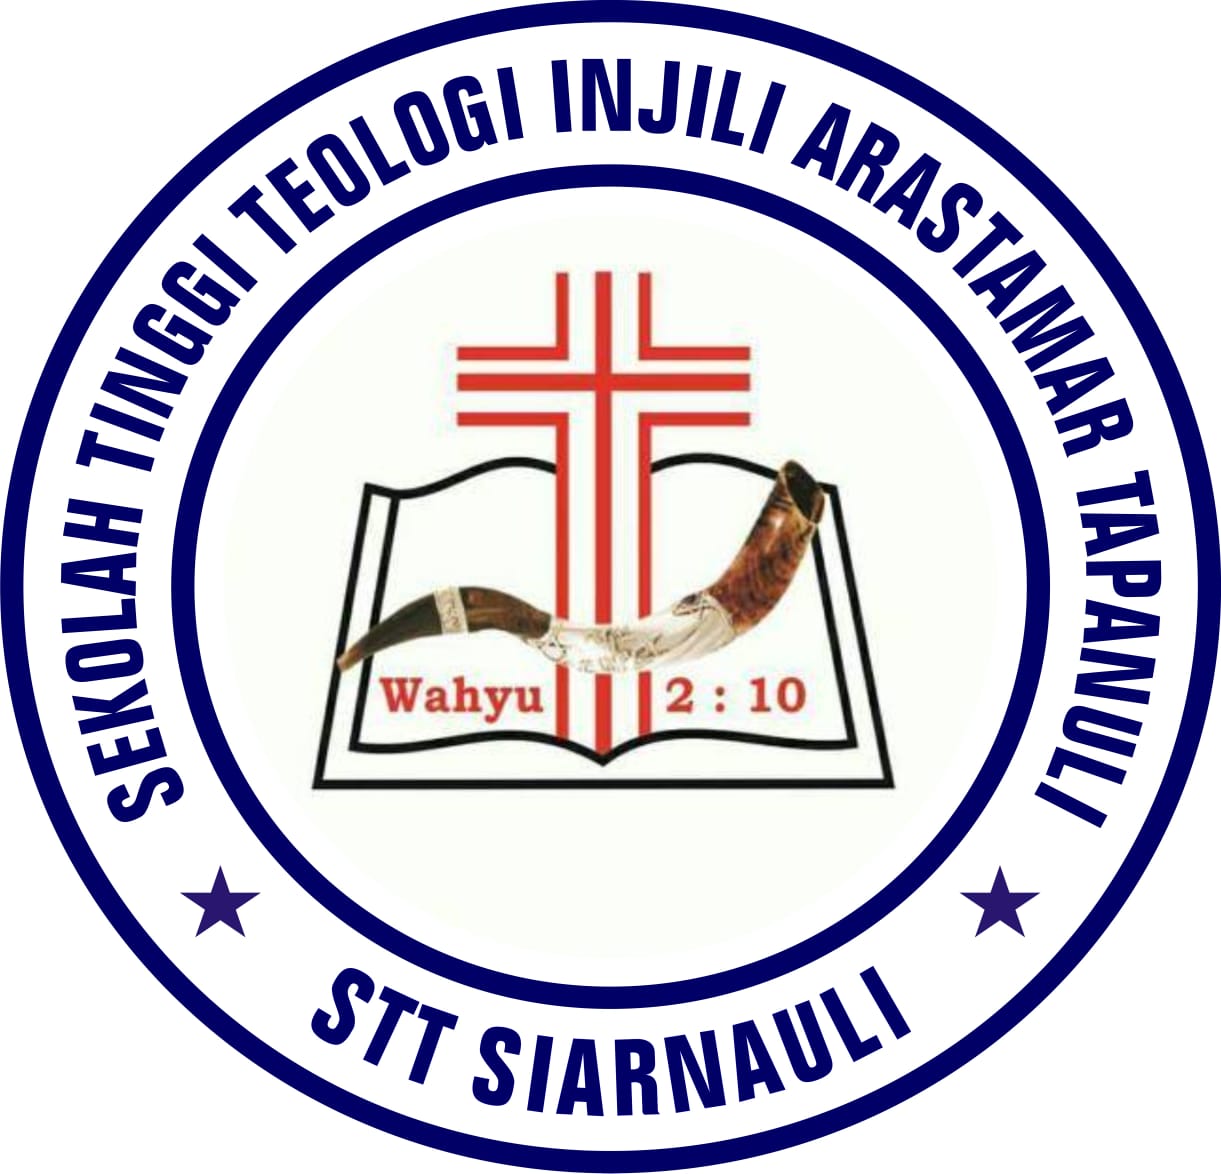 logo Sekolah Tinggi Teologi Injili Arastamar Tapanuli (STT Siarnauli)